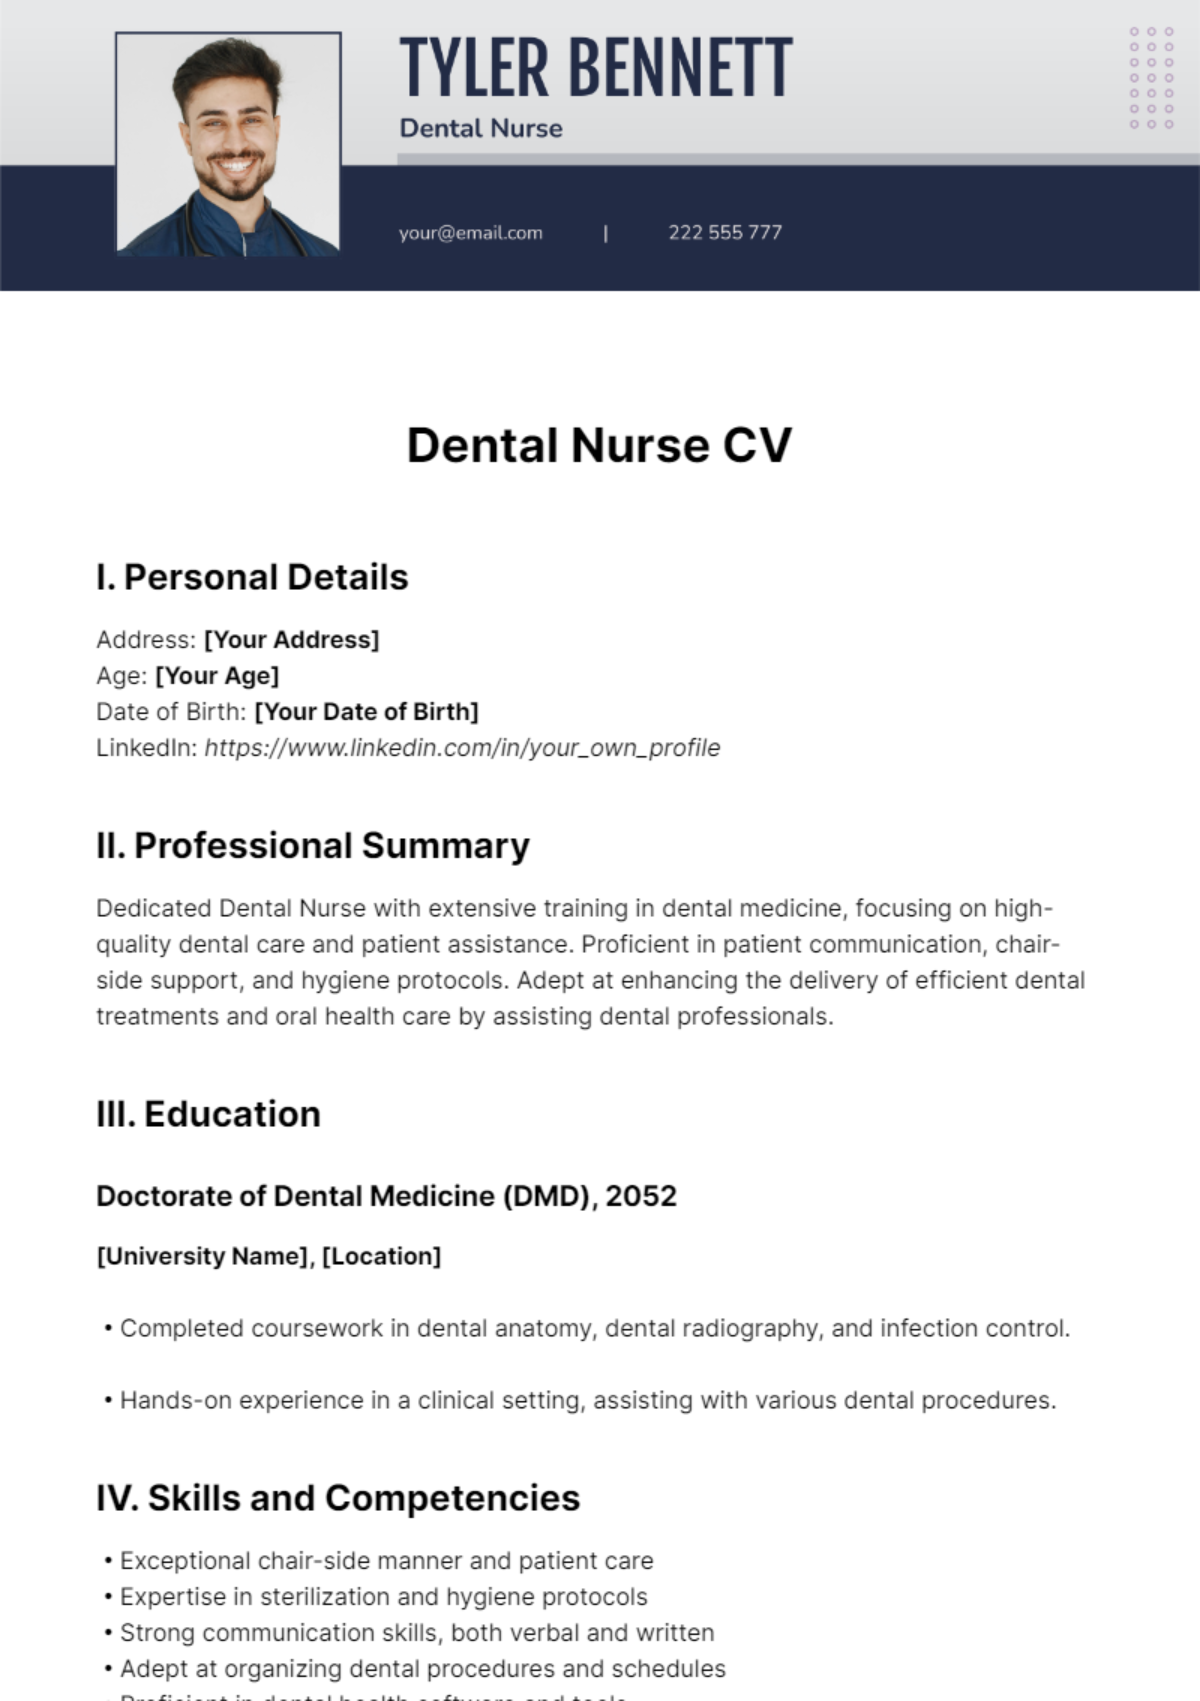 Free Dental Nurse CV Template